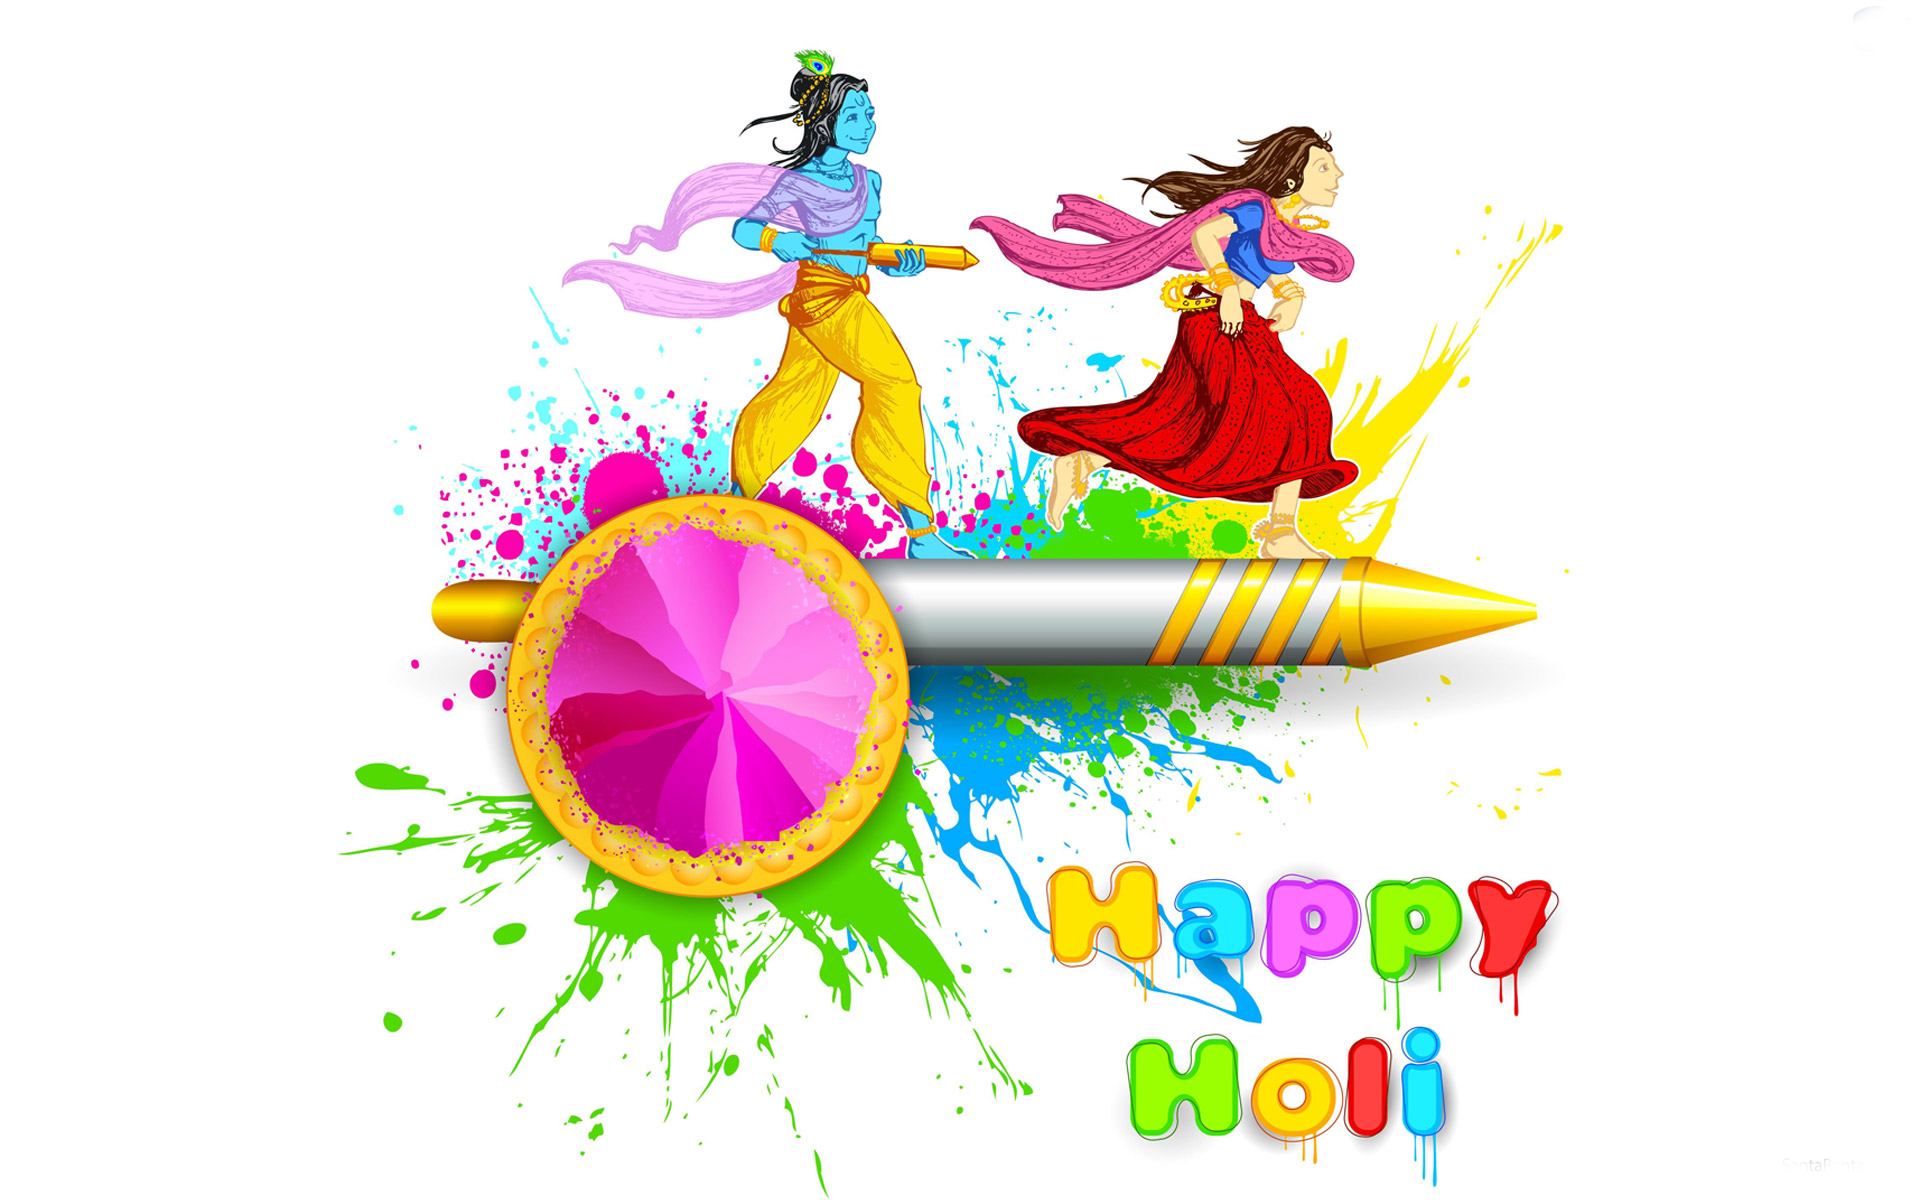 Sandeep Logo Name Logo Generator Smoothie, Summer, - Happy Holi Images 2018  - 1920x1200 Wallpaper 